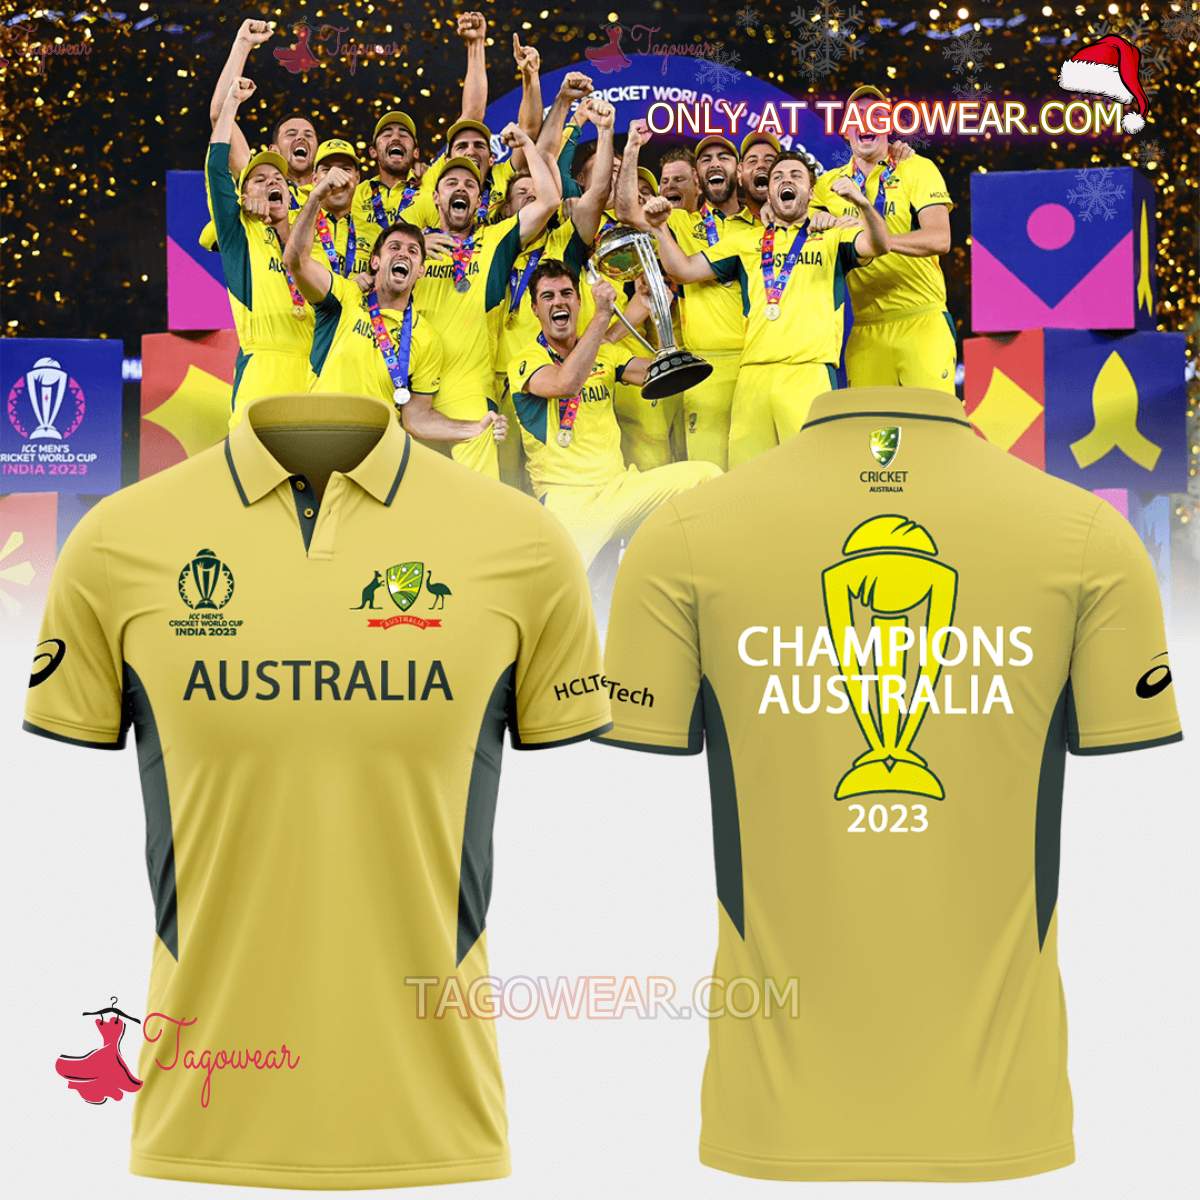 Australia Team Icc Men’s Cricket World Cup Champions 2023 Polo Shirt